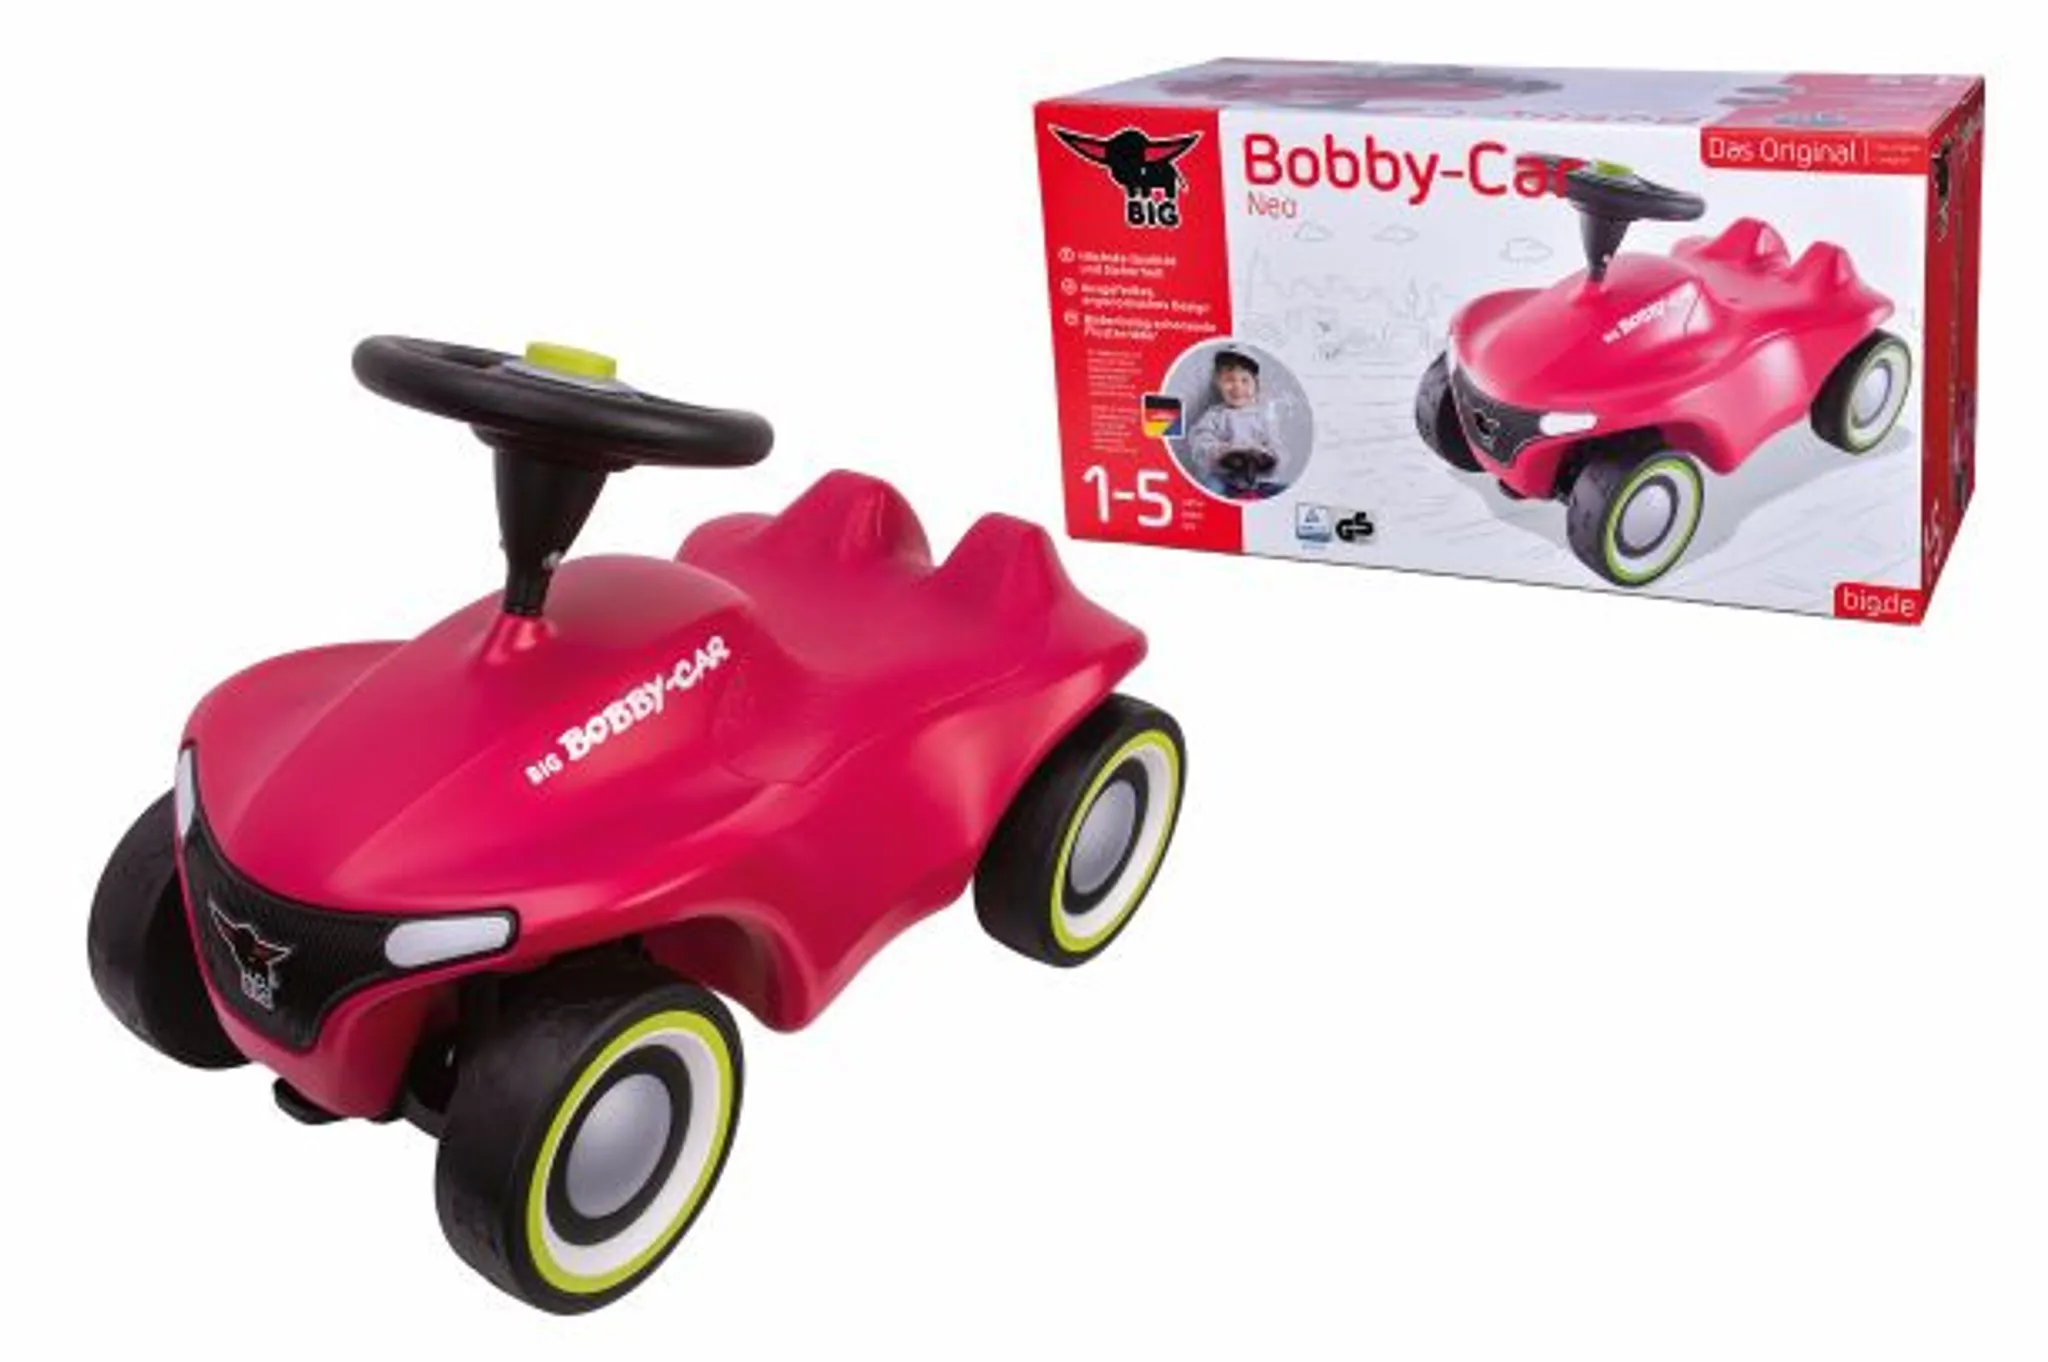 BIG-Bobby-Car-Neo Pink Rutschauto